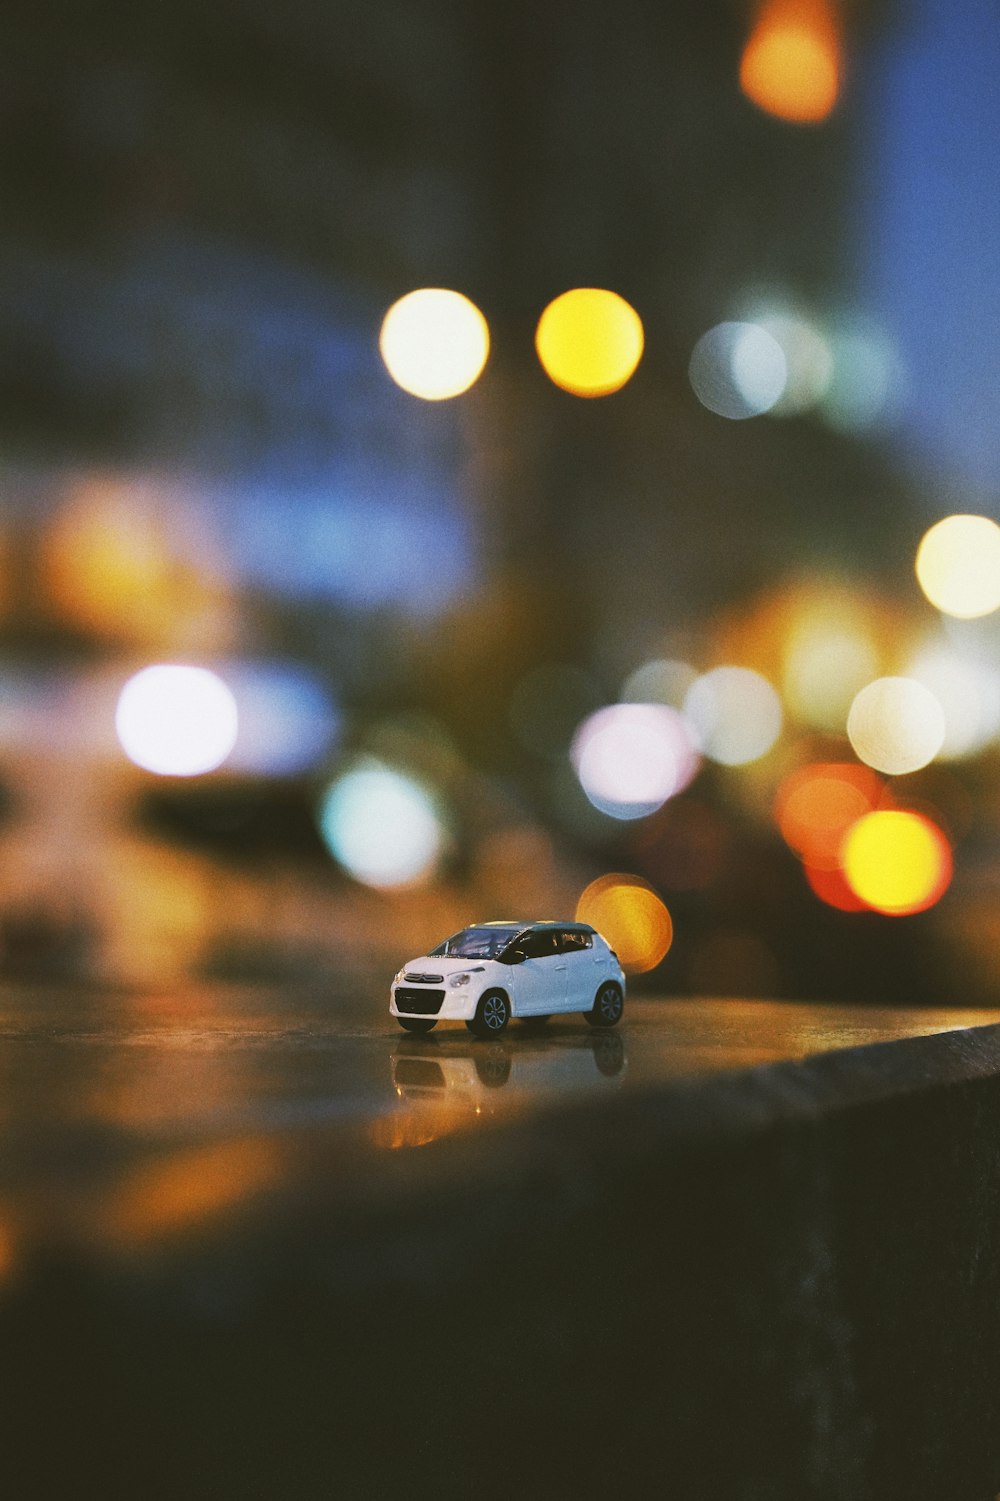 bokeh photography of white car miniature